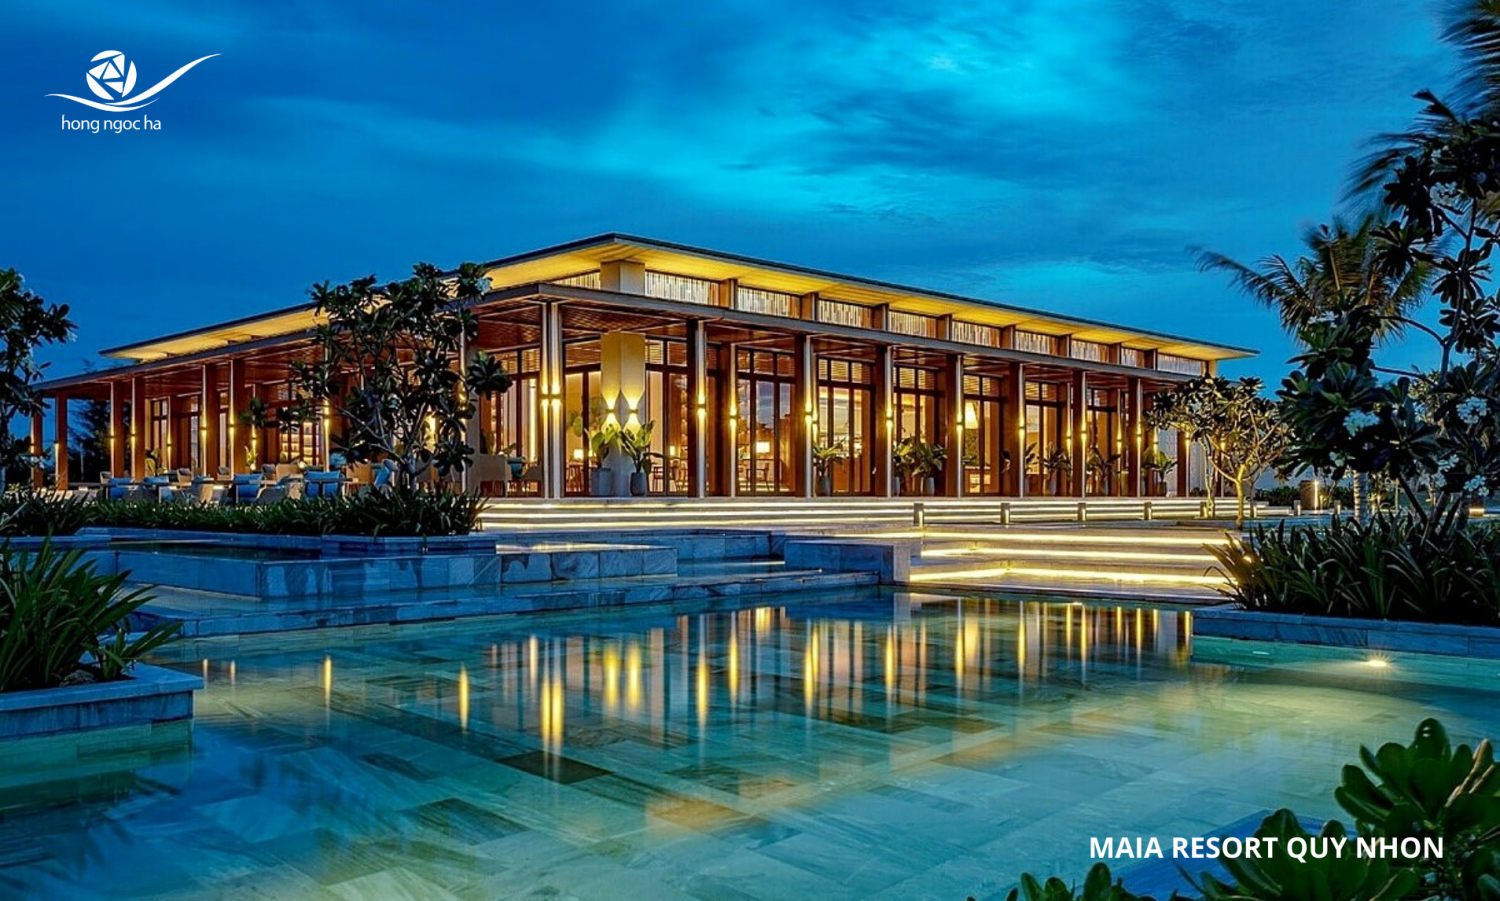 Maia Resort Quy Nhon